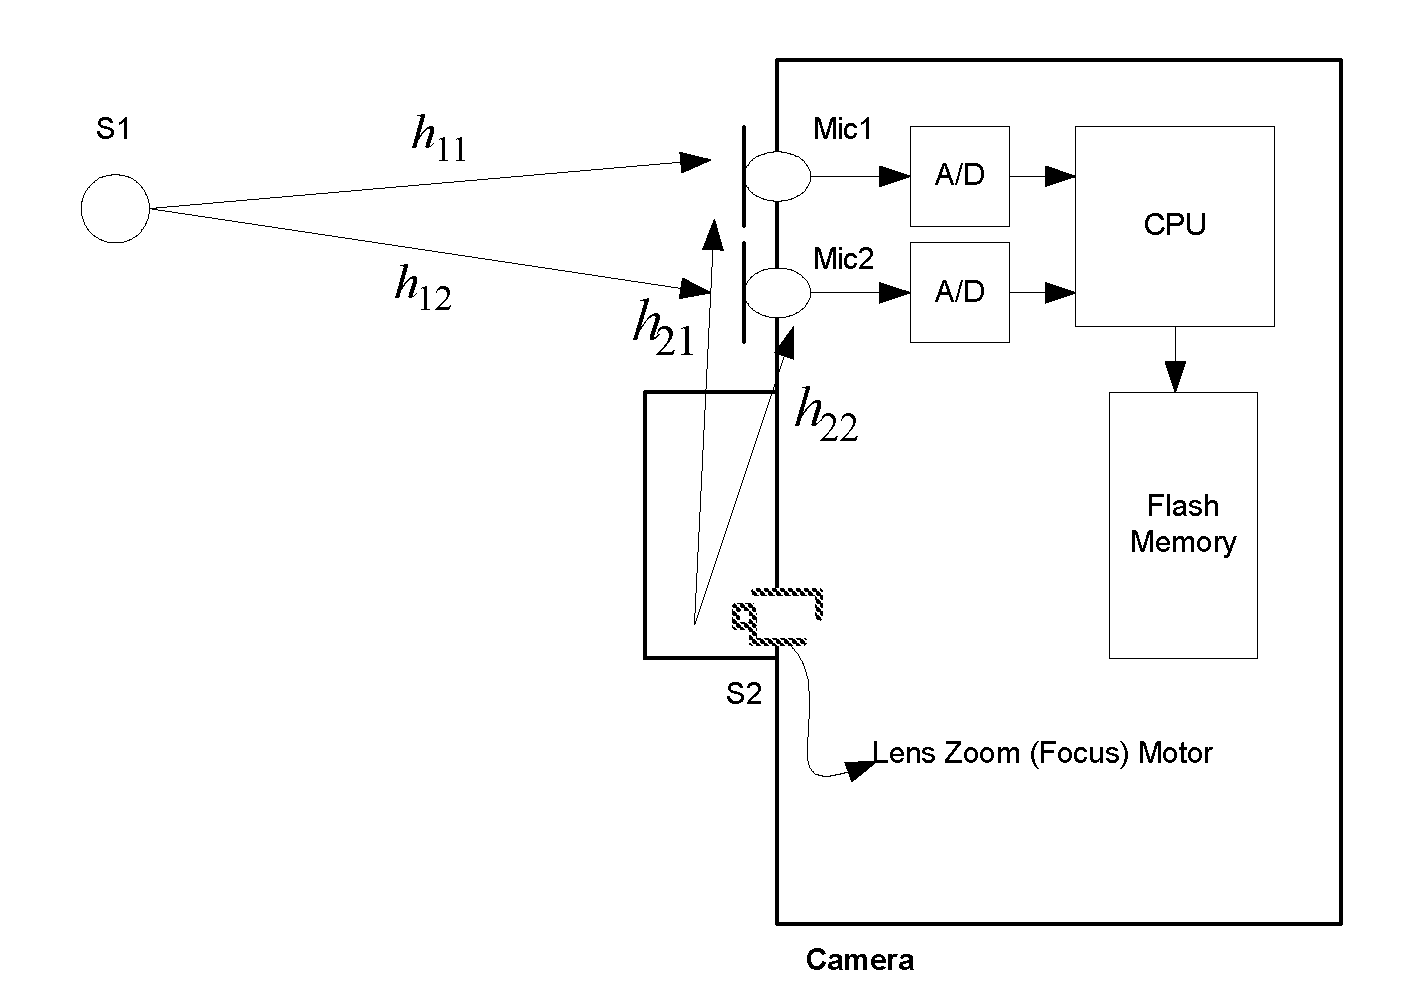 Motor noise reduction circuit